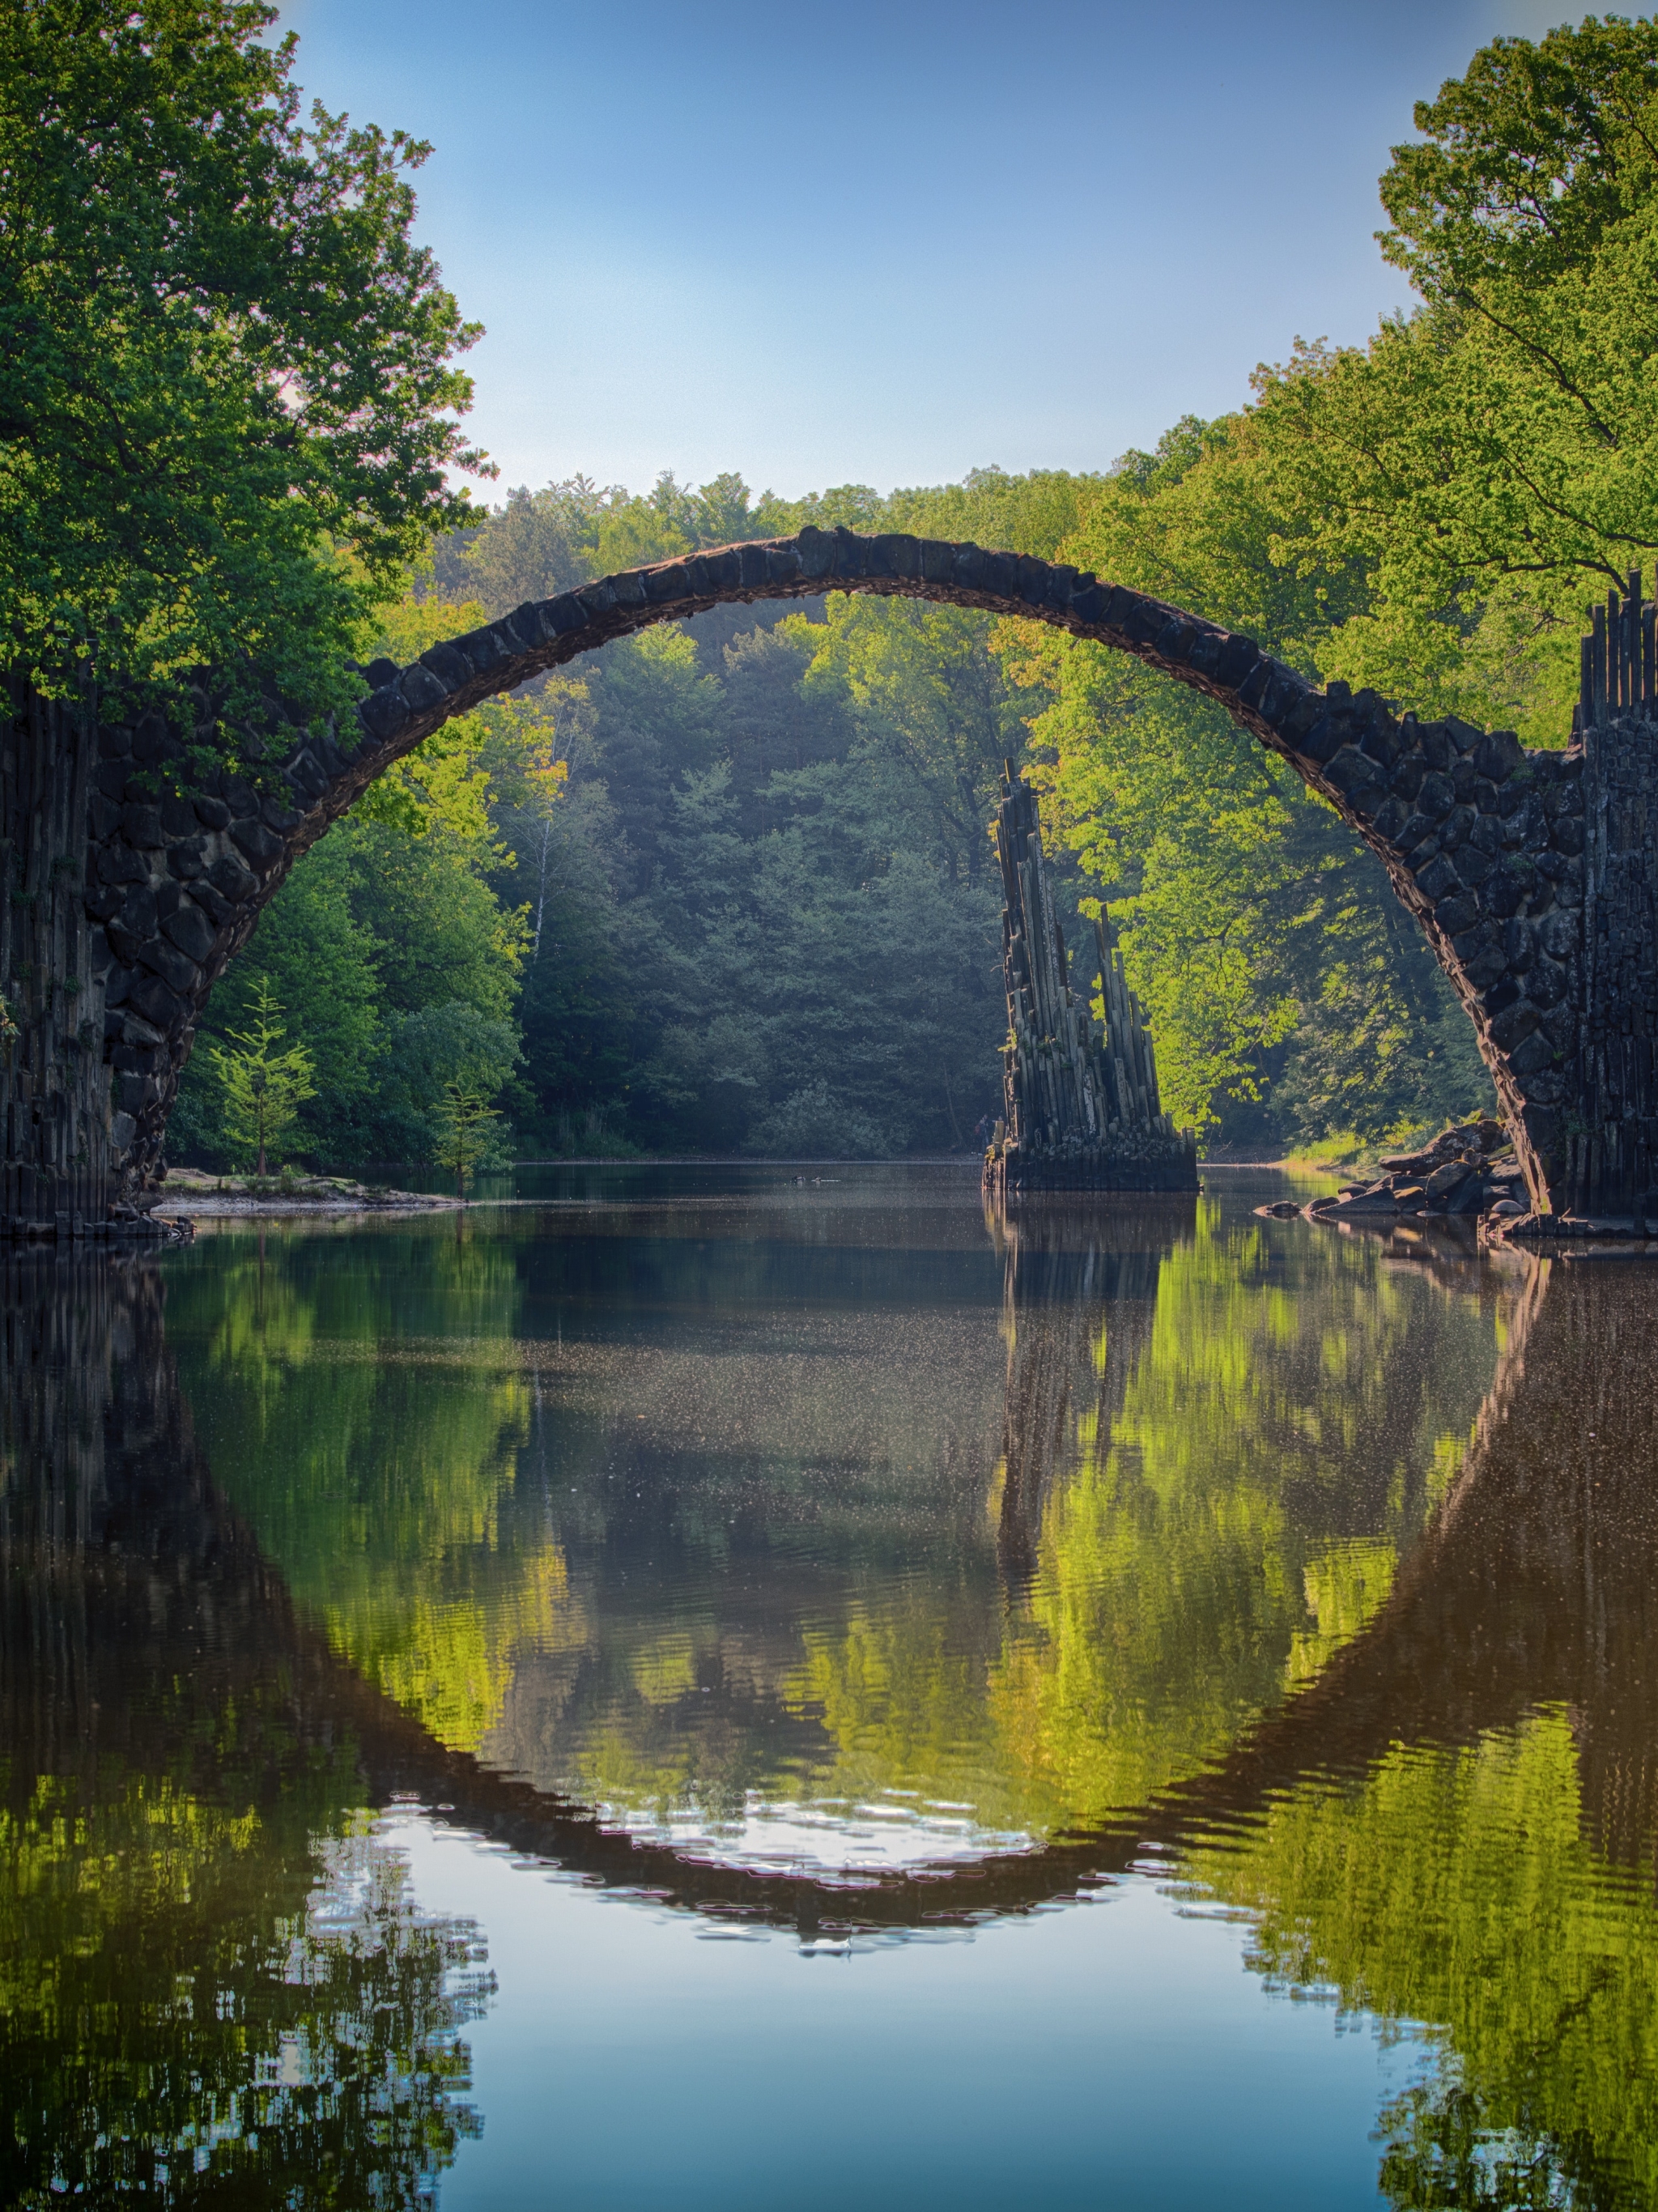 man made, devil's bridge, river, bridge, nature, reflection